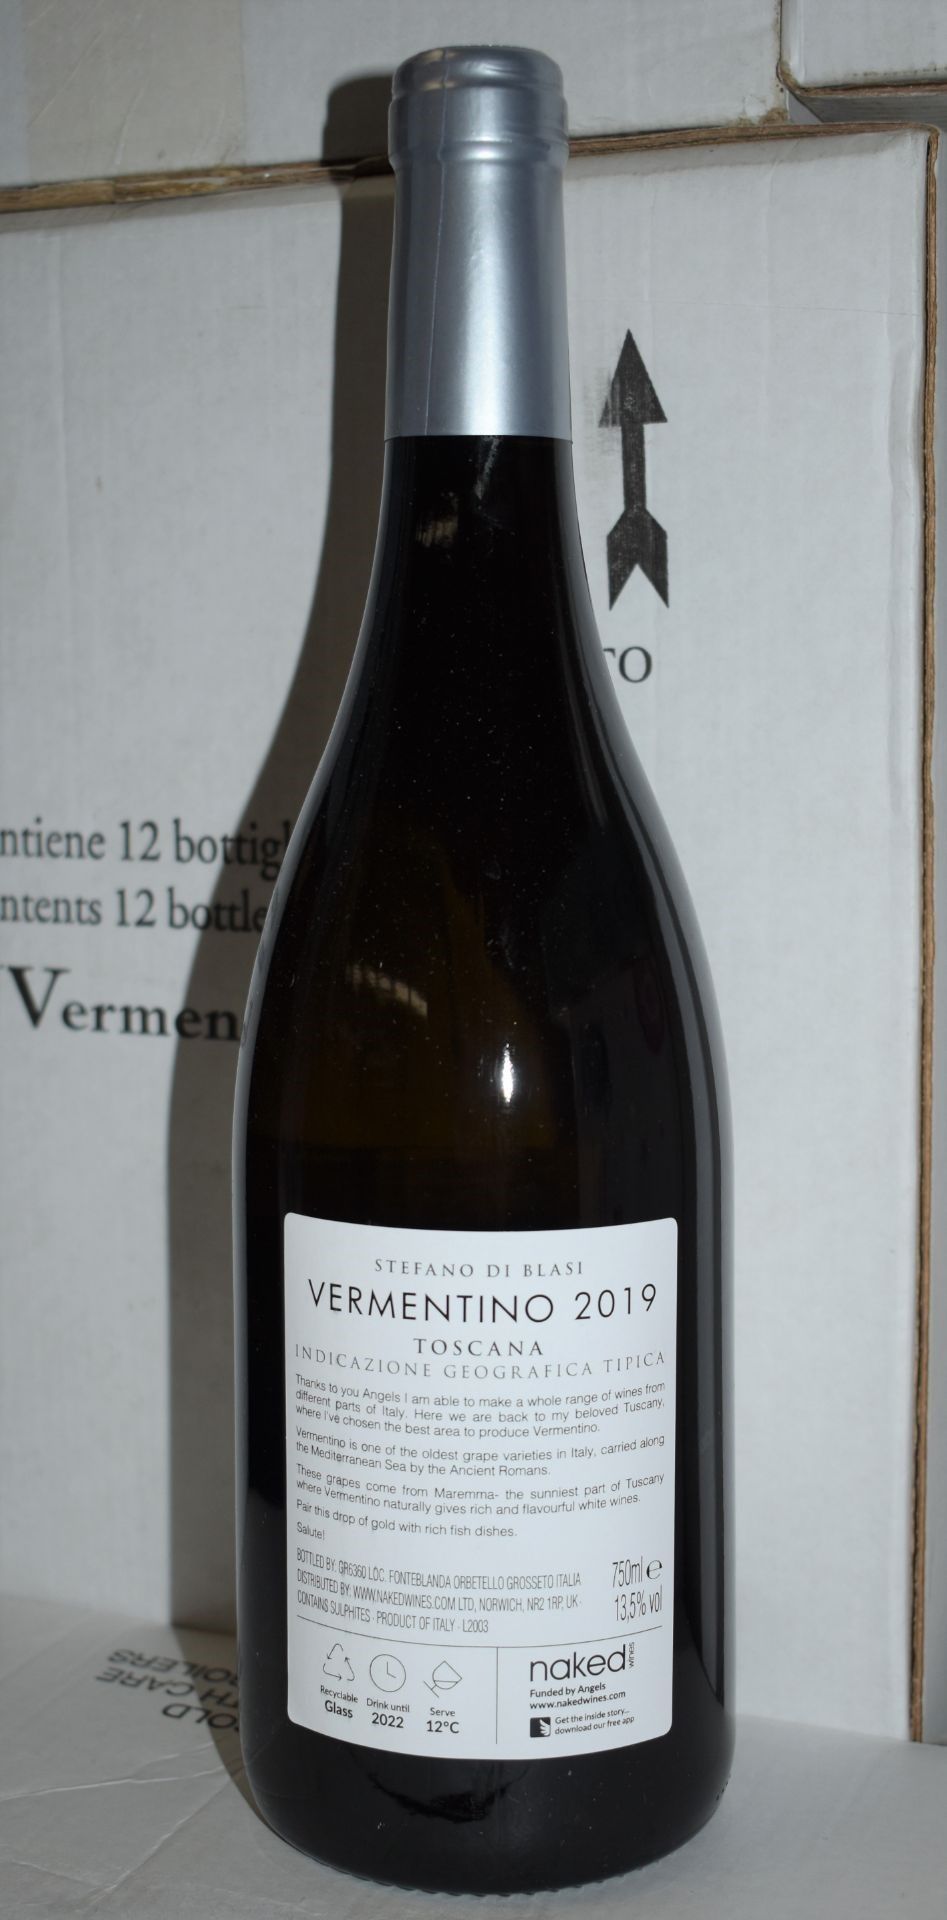 12 x Bottles of Stefano Di Blasi 2019 Vermentino Toscana 13.5% Wine - 750ml Bottles - Drink Until - Image 5 of 7